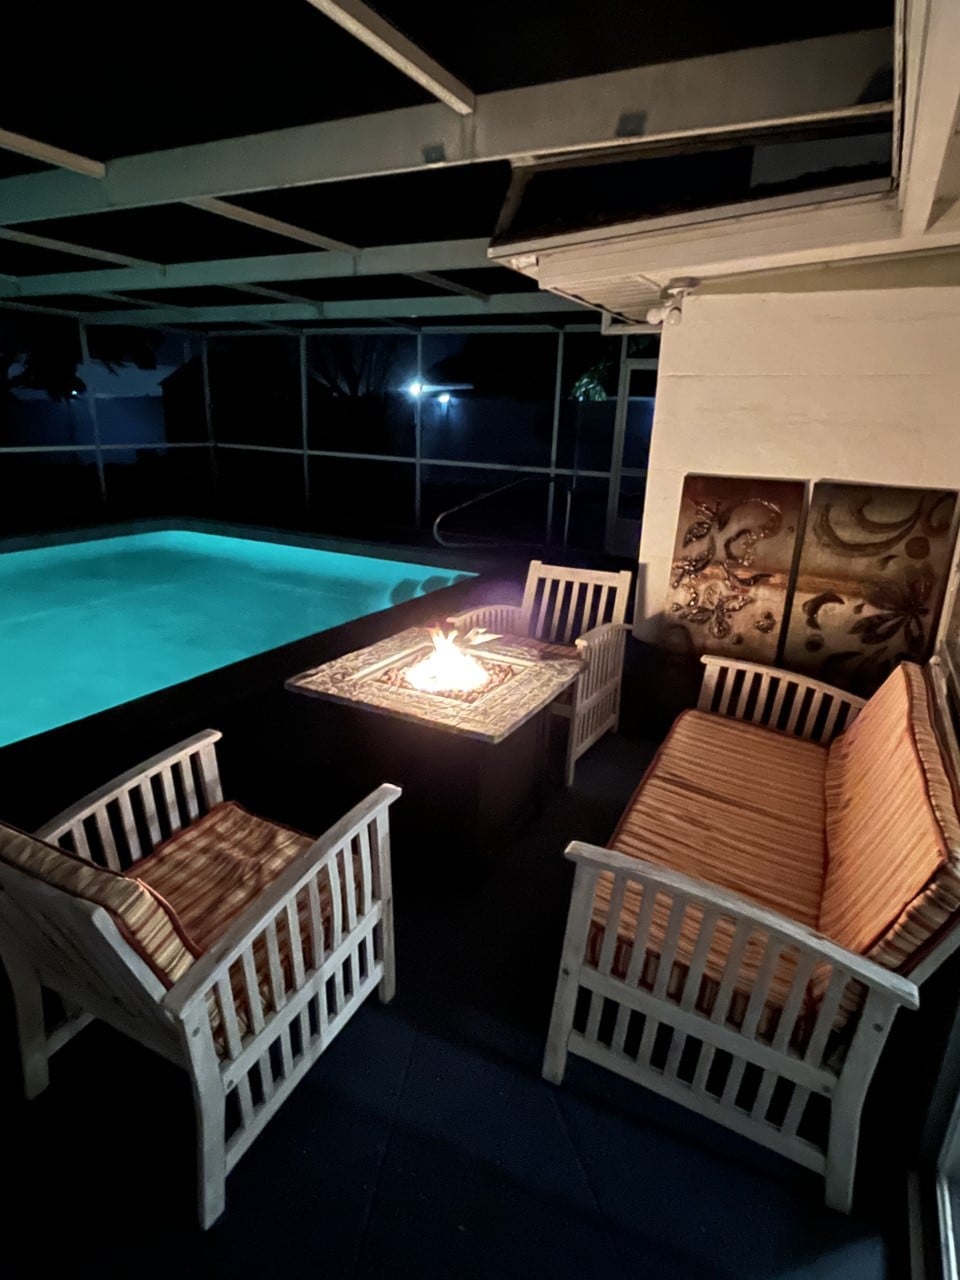 Vacation Pool - House in Bradenton!